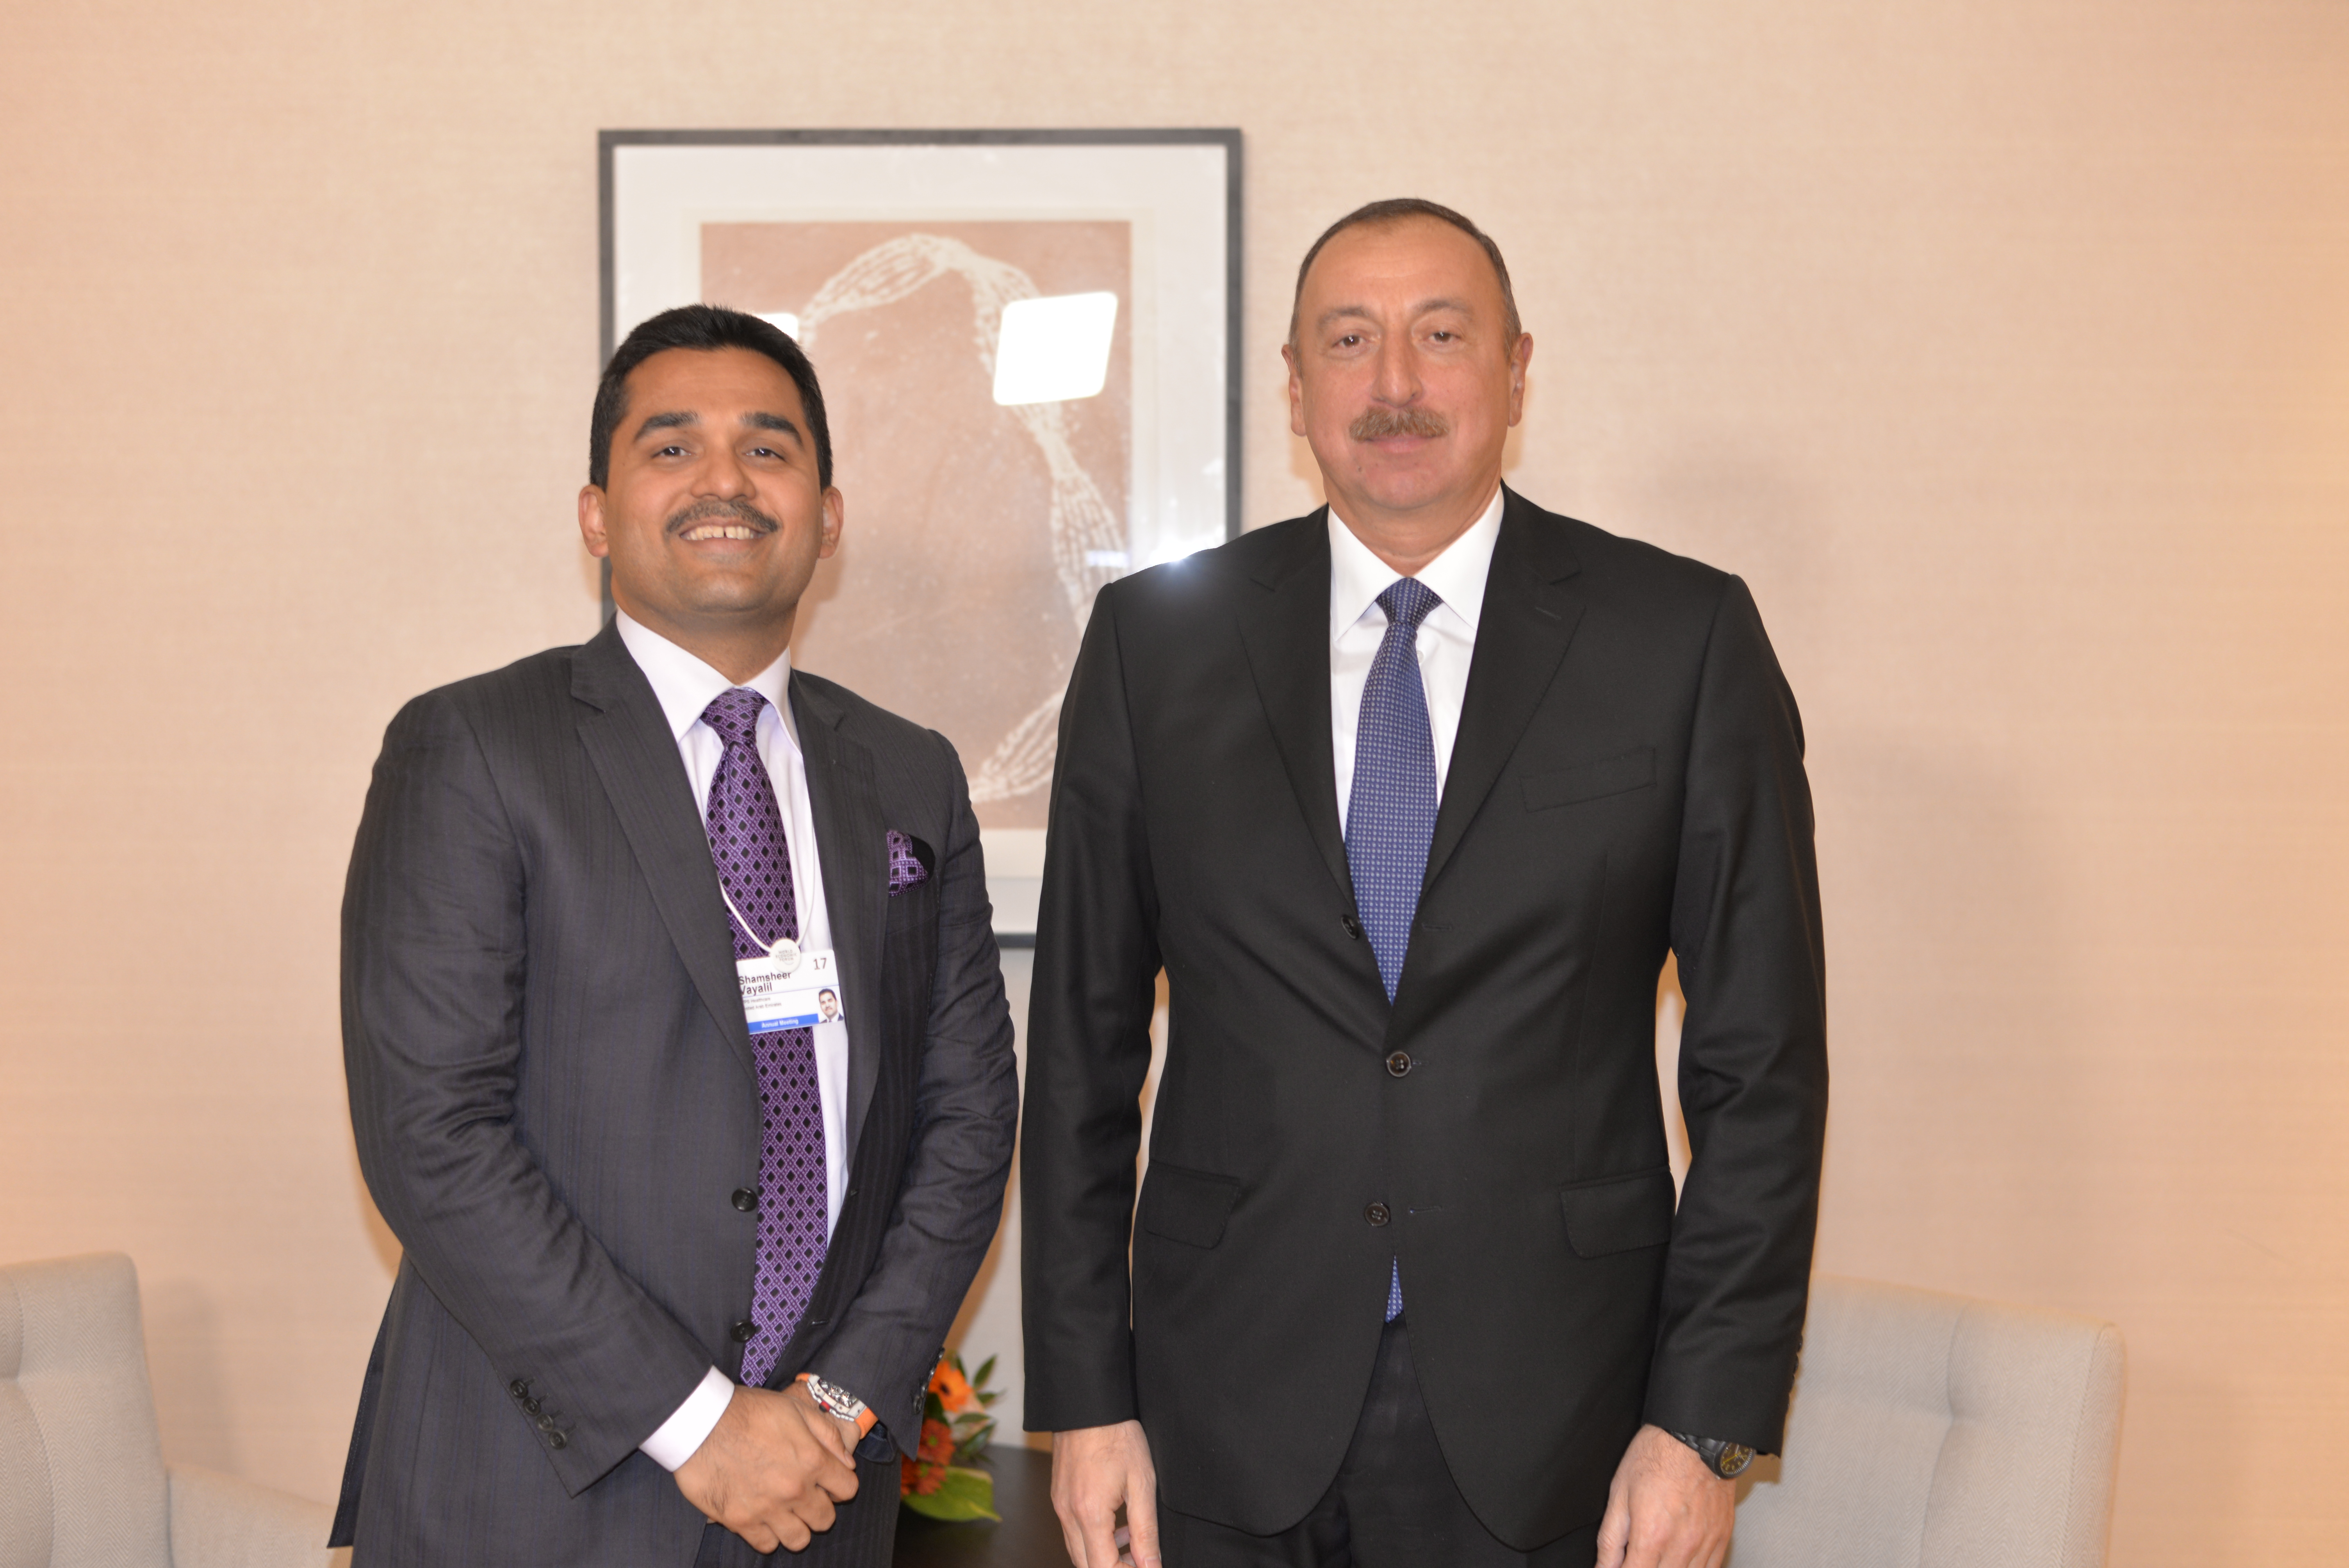 With Mr. Ilham Aliyev, President of the Republic of Azerbaijan